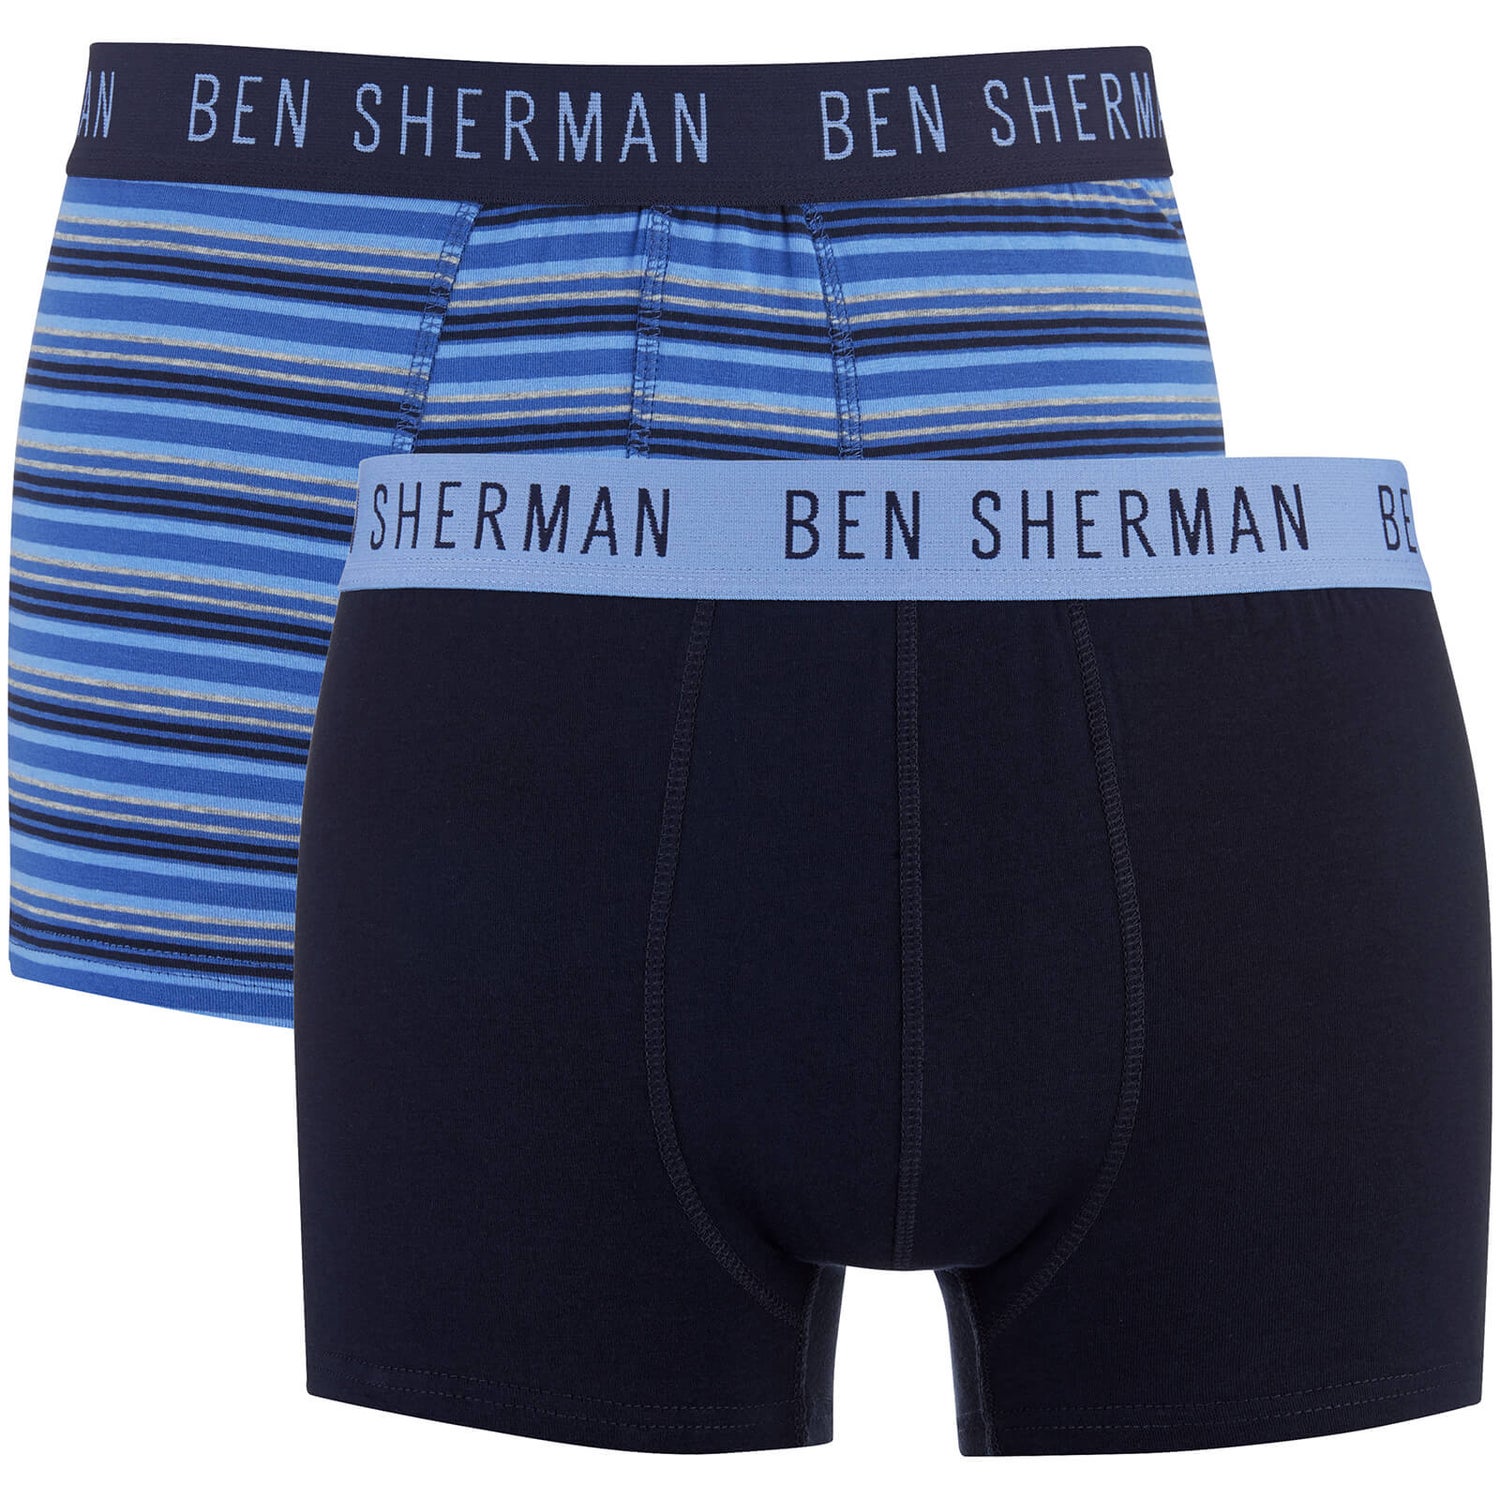 Ben Sherman Men's Kent 2 Pack Boxers - Blue/Navy Mens Underwear